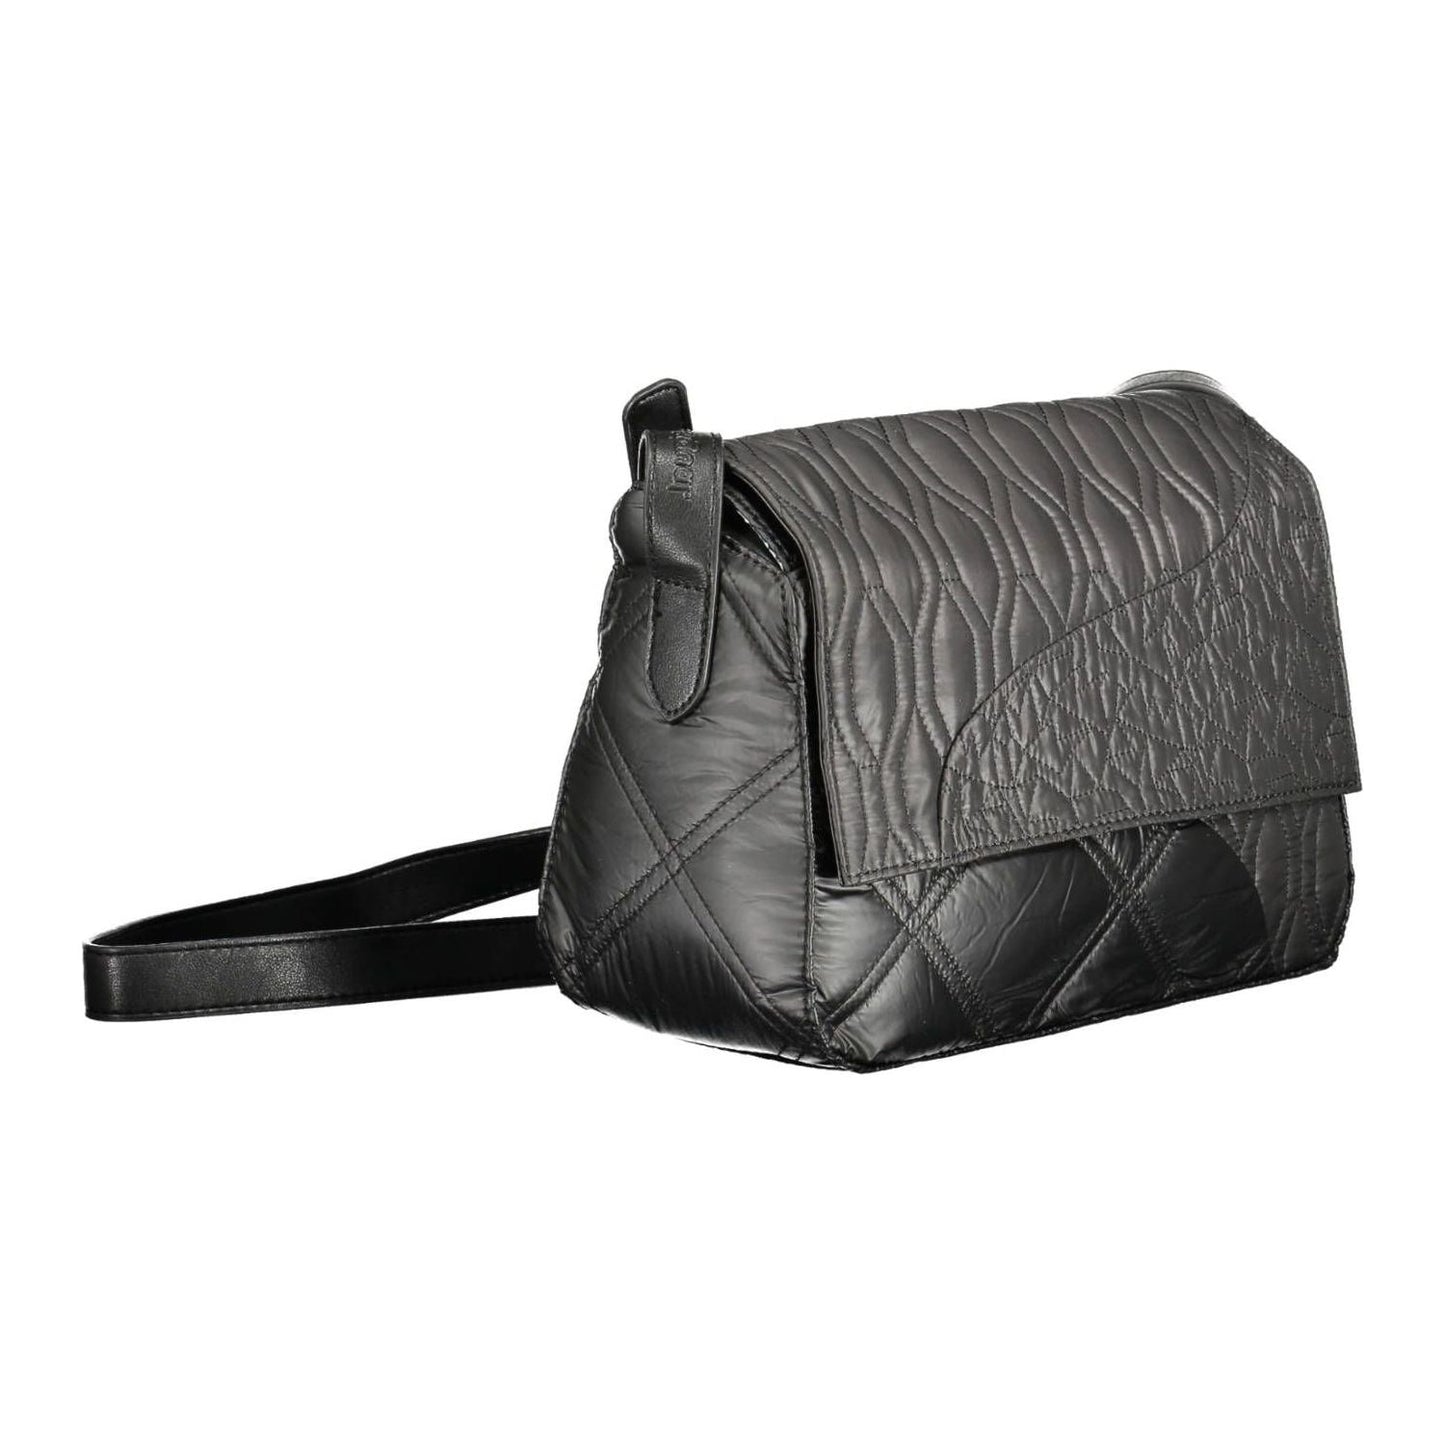 Desigual Chic Contrast Detail Black Shoulder Bag chic-contrast-detail-black-shoulder-bag